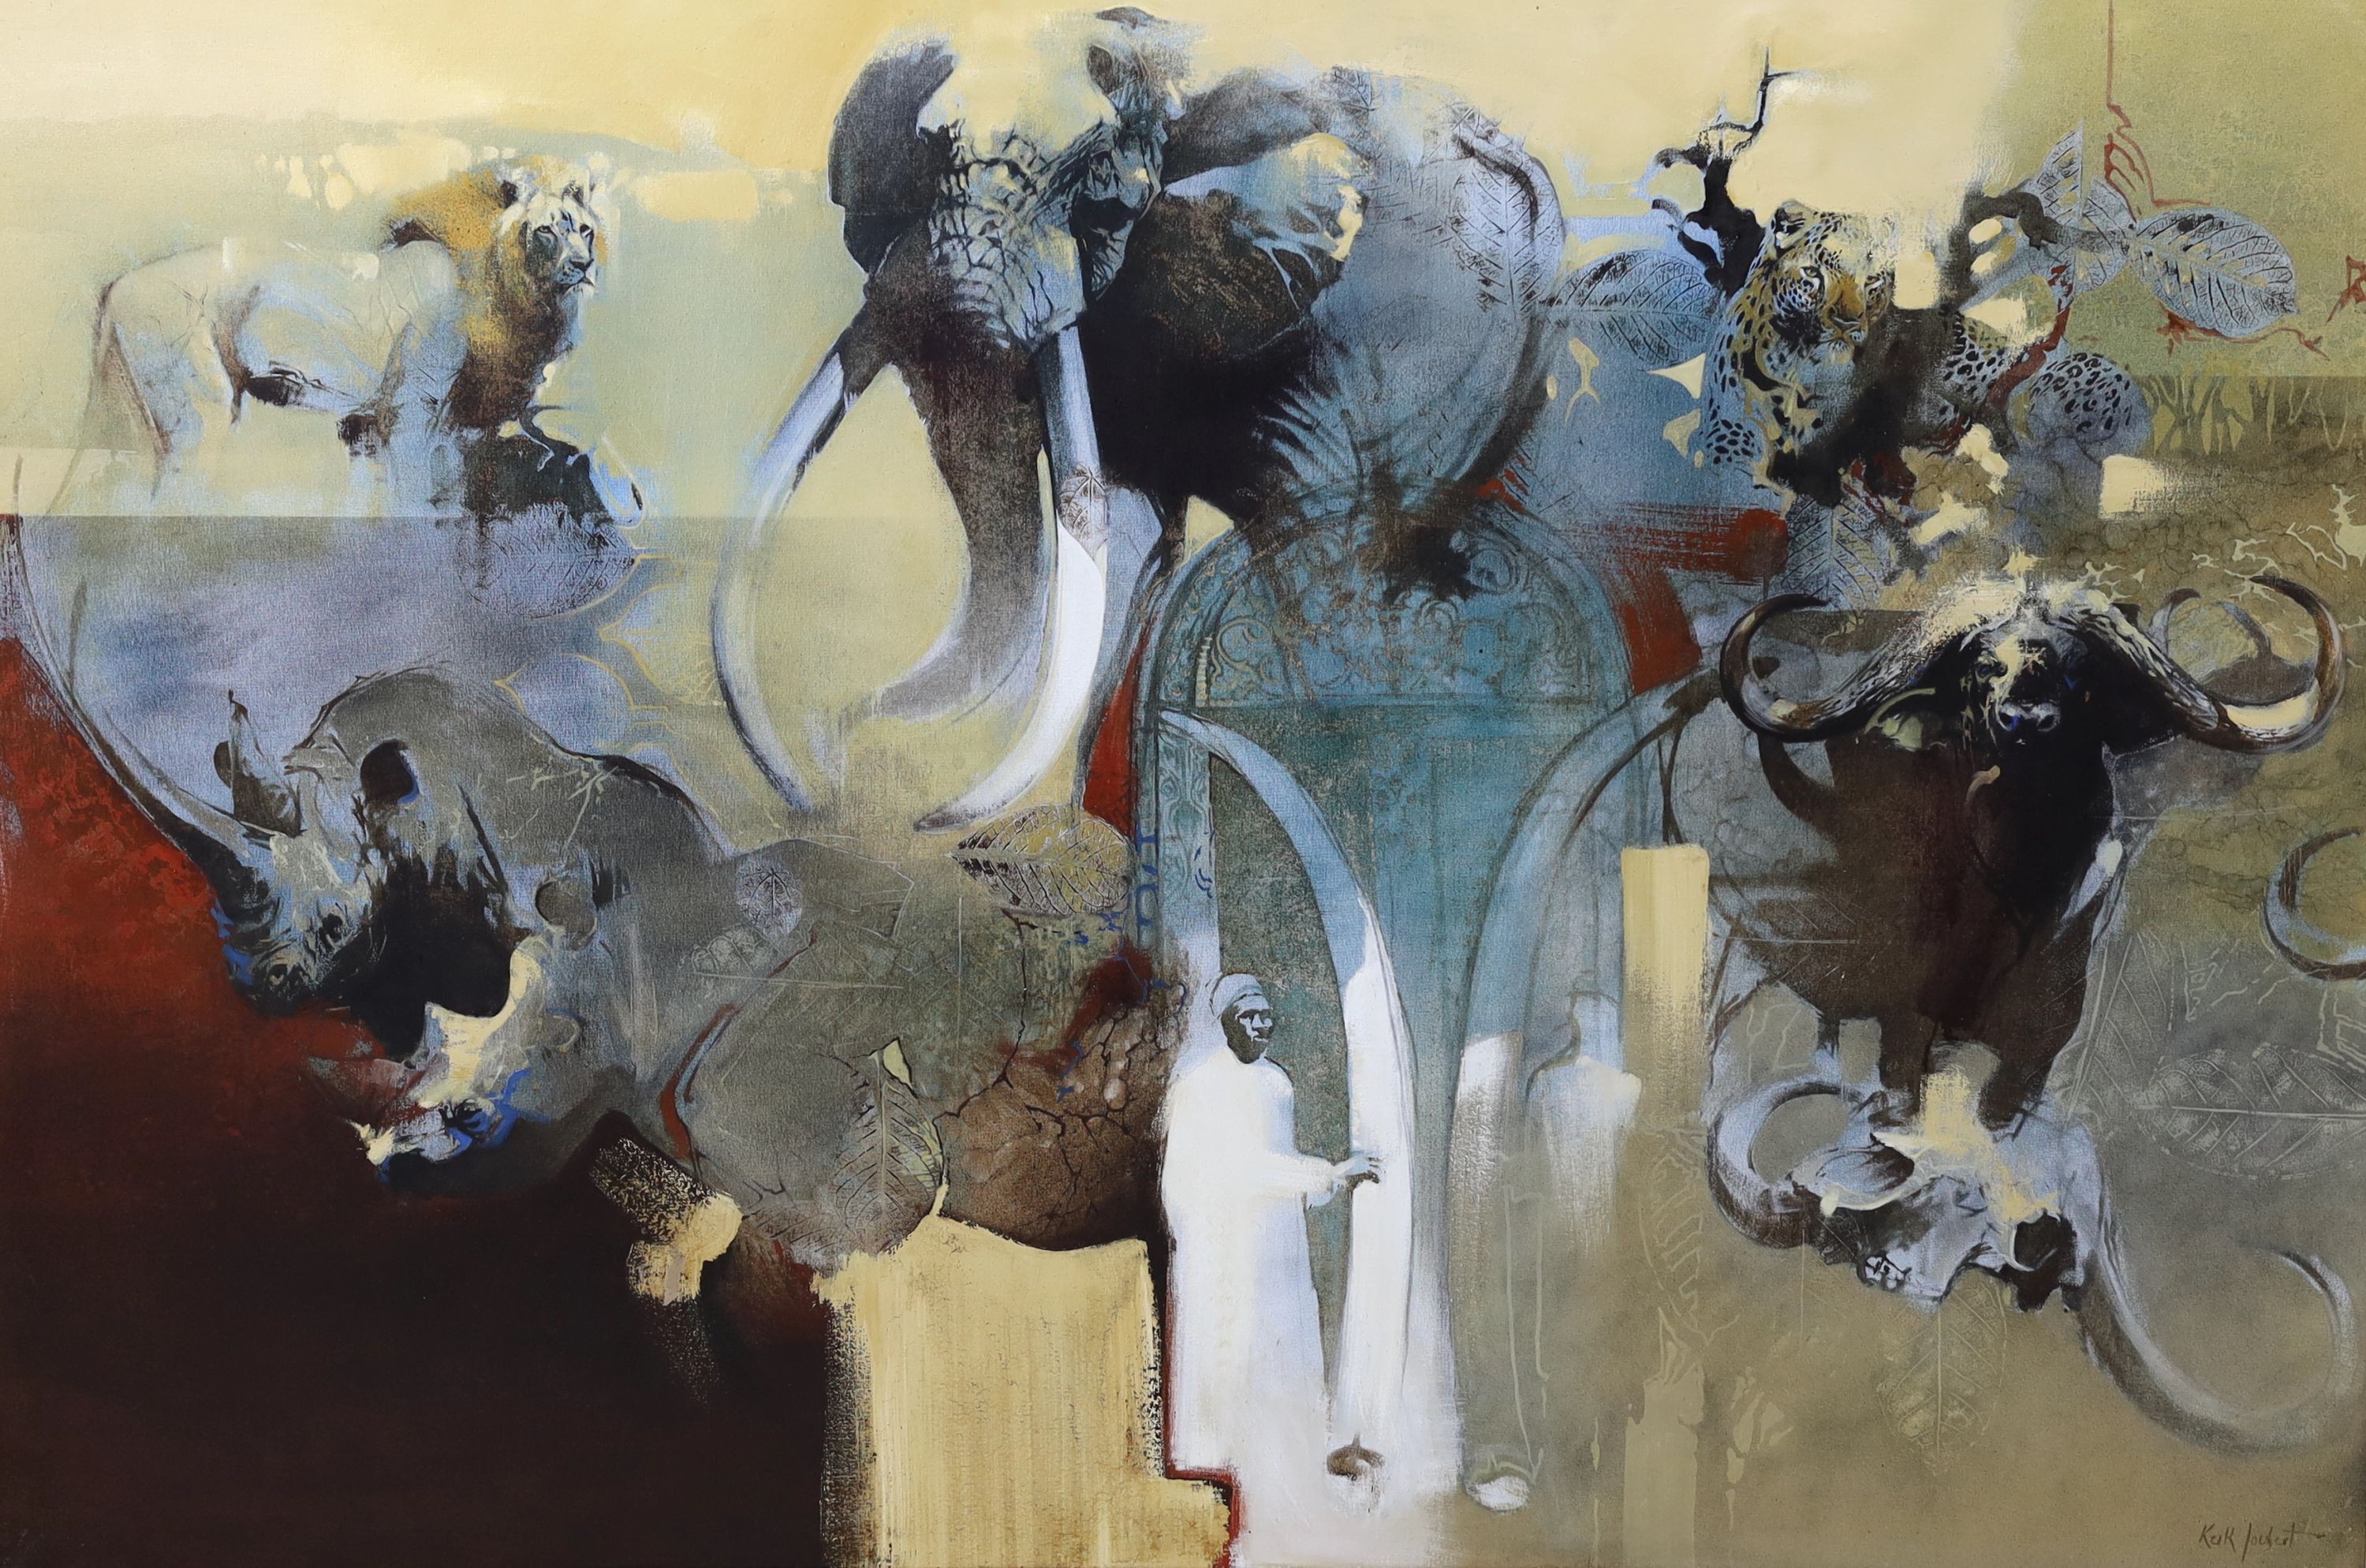 Keith Joubert (SA, 1948-2013), 'The Big Five', oil on canvas, 121 x 182cm